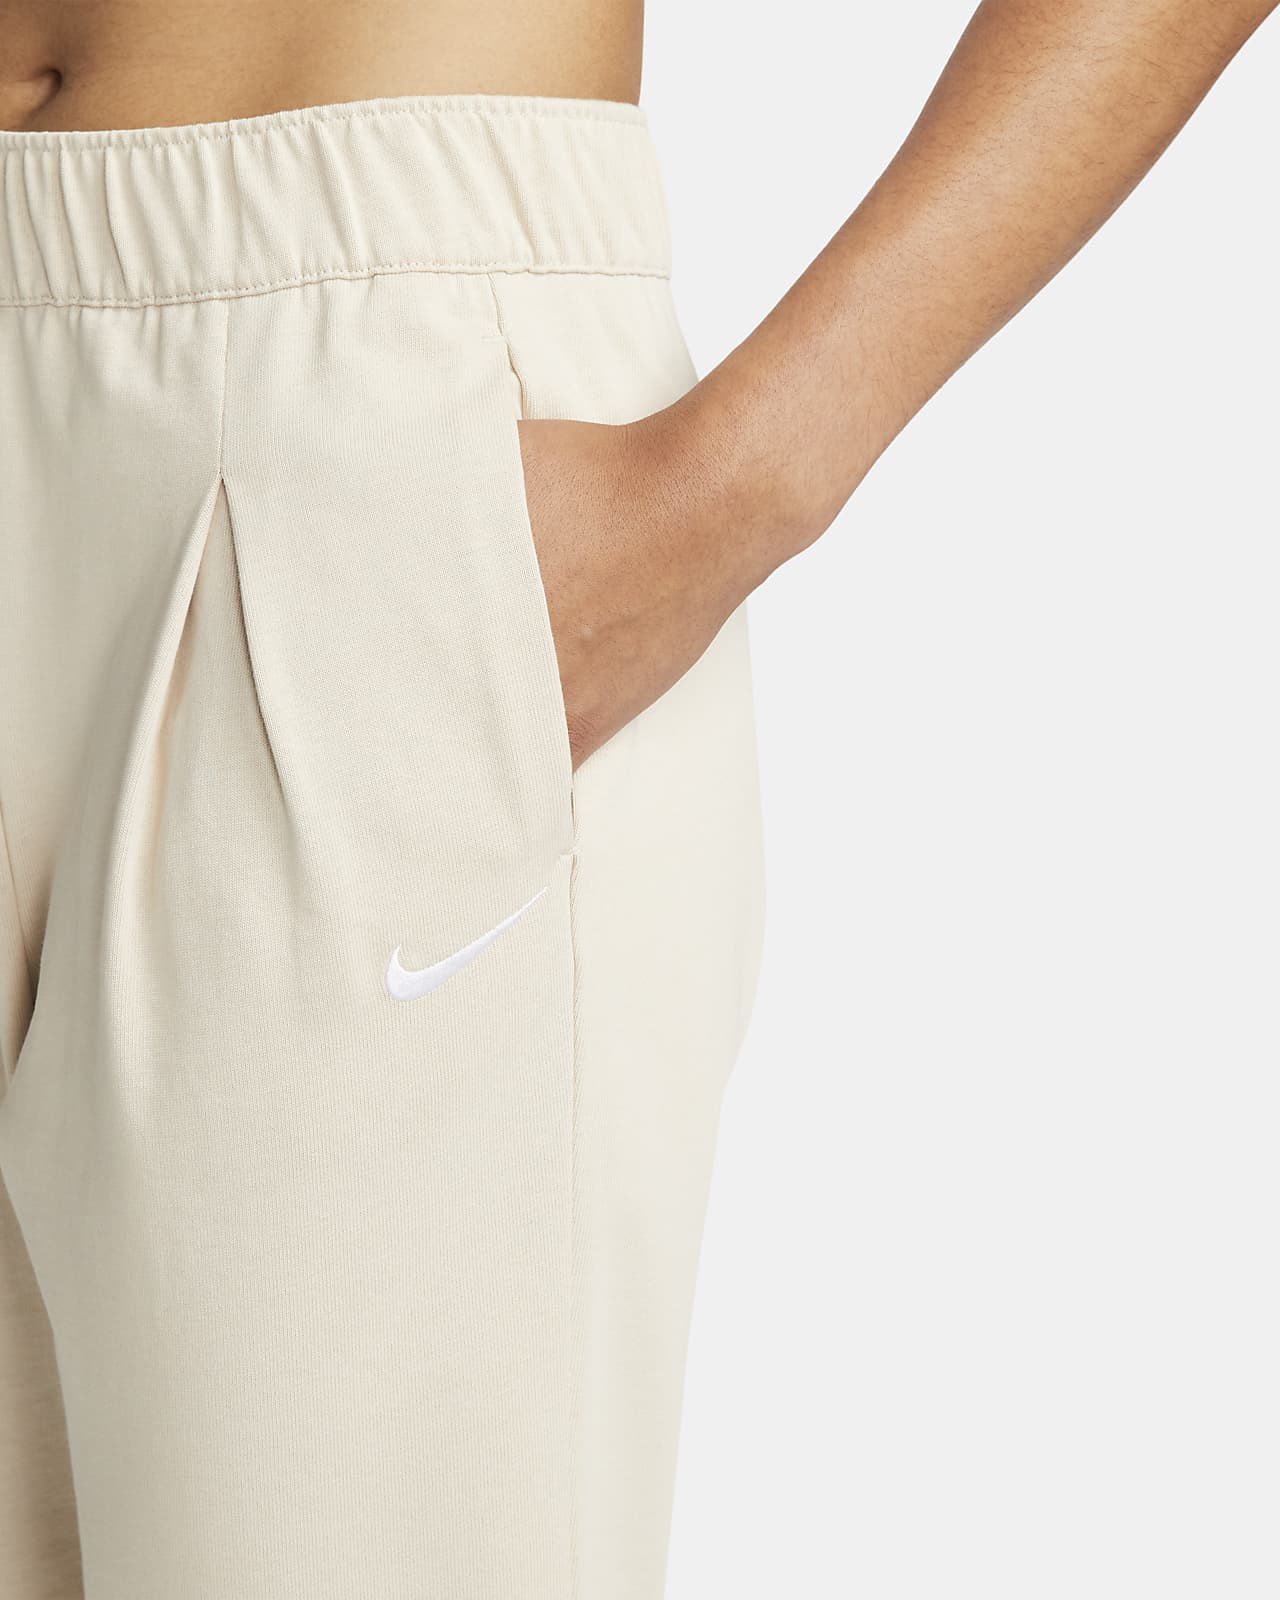 NIKE Womens sportswear Capri Trousers UK 12 Medium W32 L19 Grey, Vintage &  Second-Hand Clothing Online